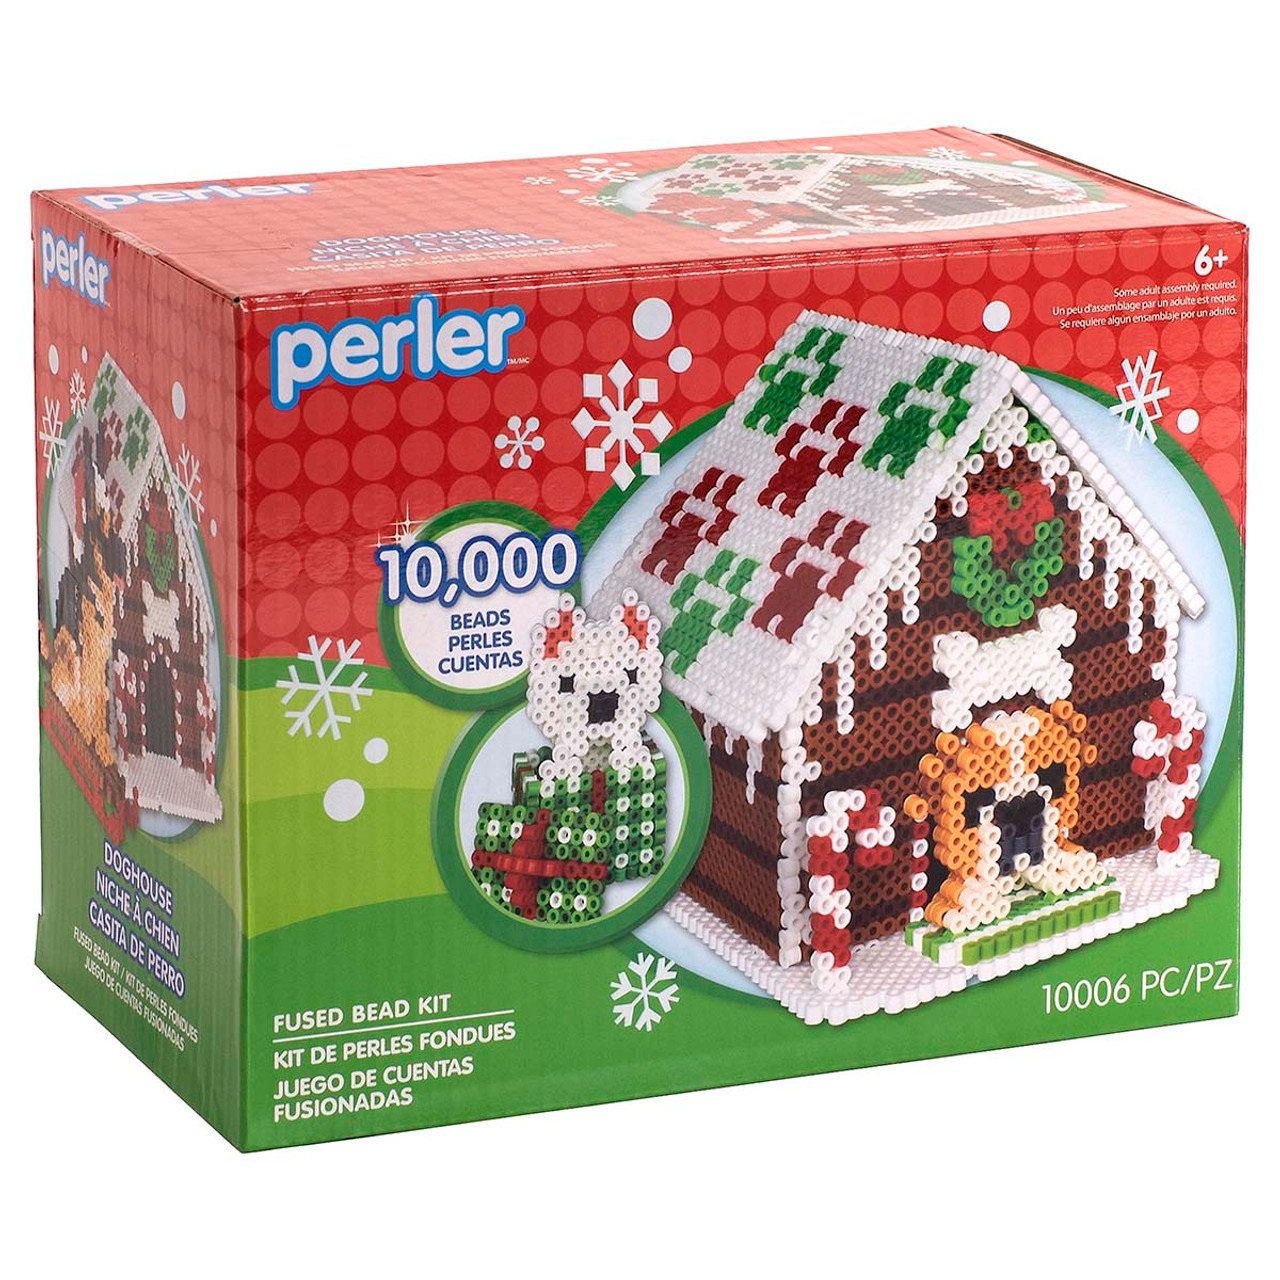 Perler Fused Bead Kit-3D Toy Shop Gingerbread